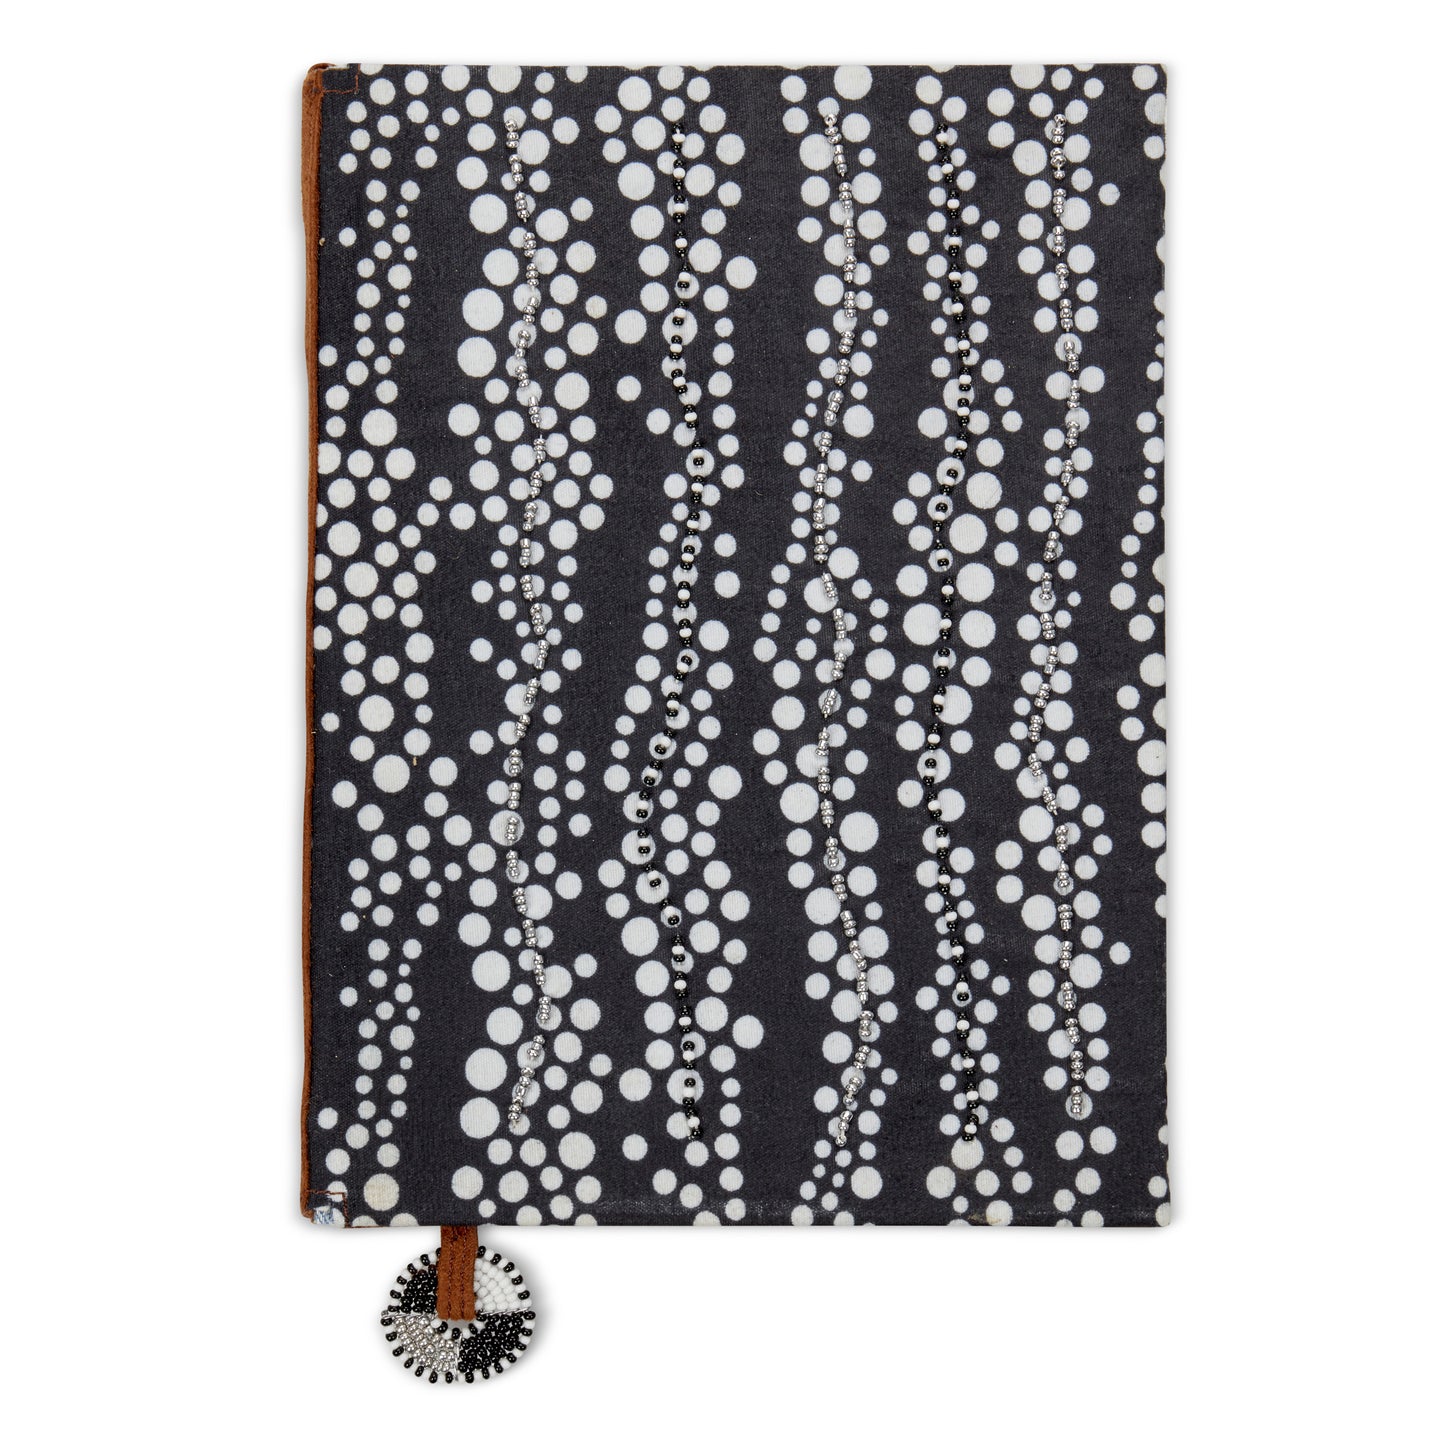 Notebook Wrapped in Kitenge Fabric, Medium- "Pebbles"